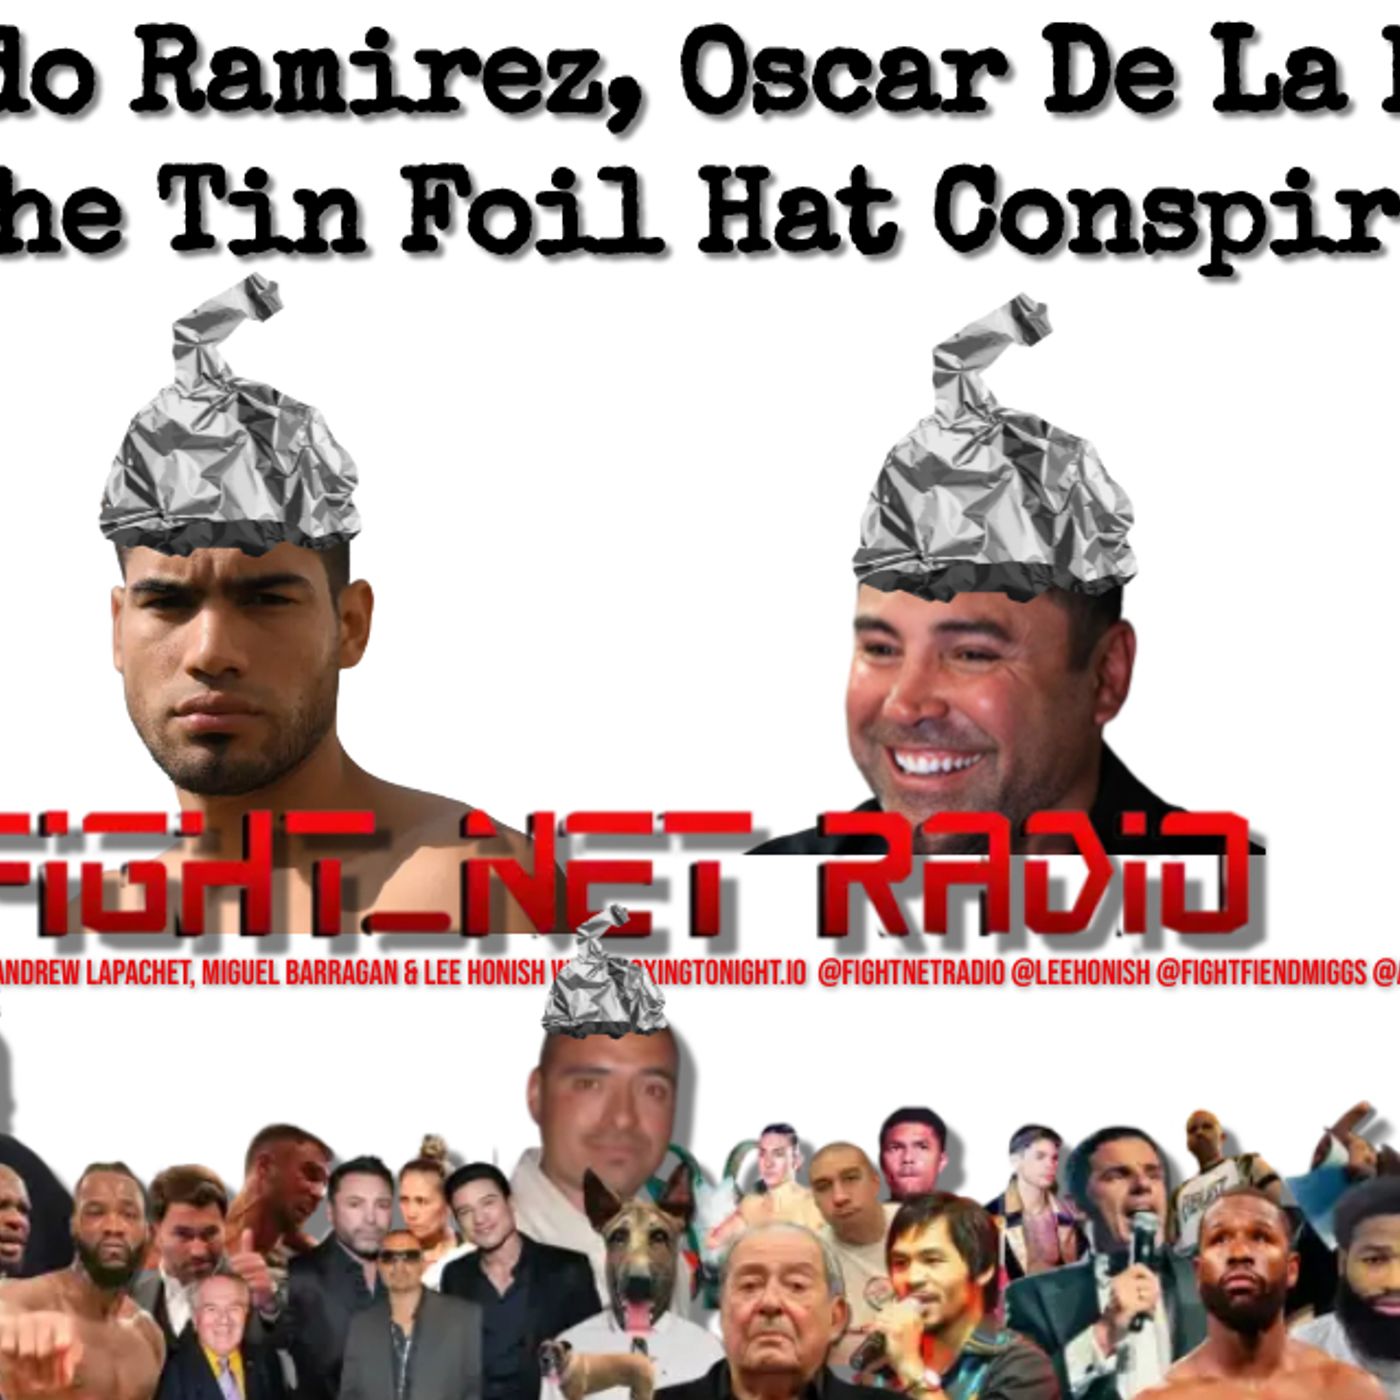 Zurdo Ramirez, Oscar De La Hoya  & The Tin Foil Hat Conspiracy